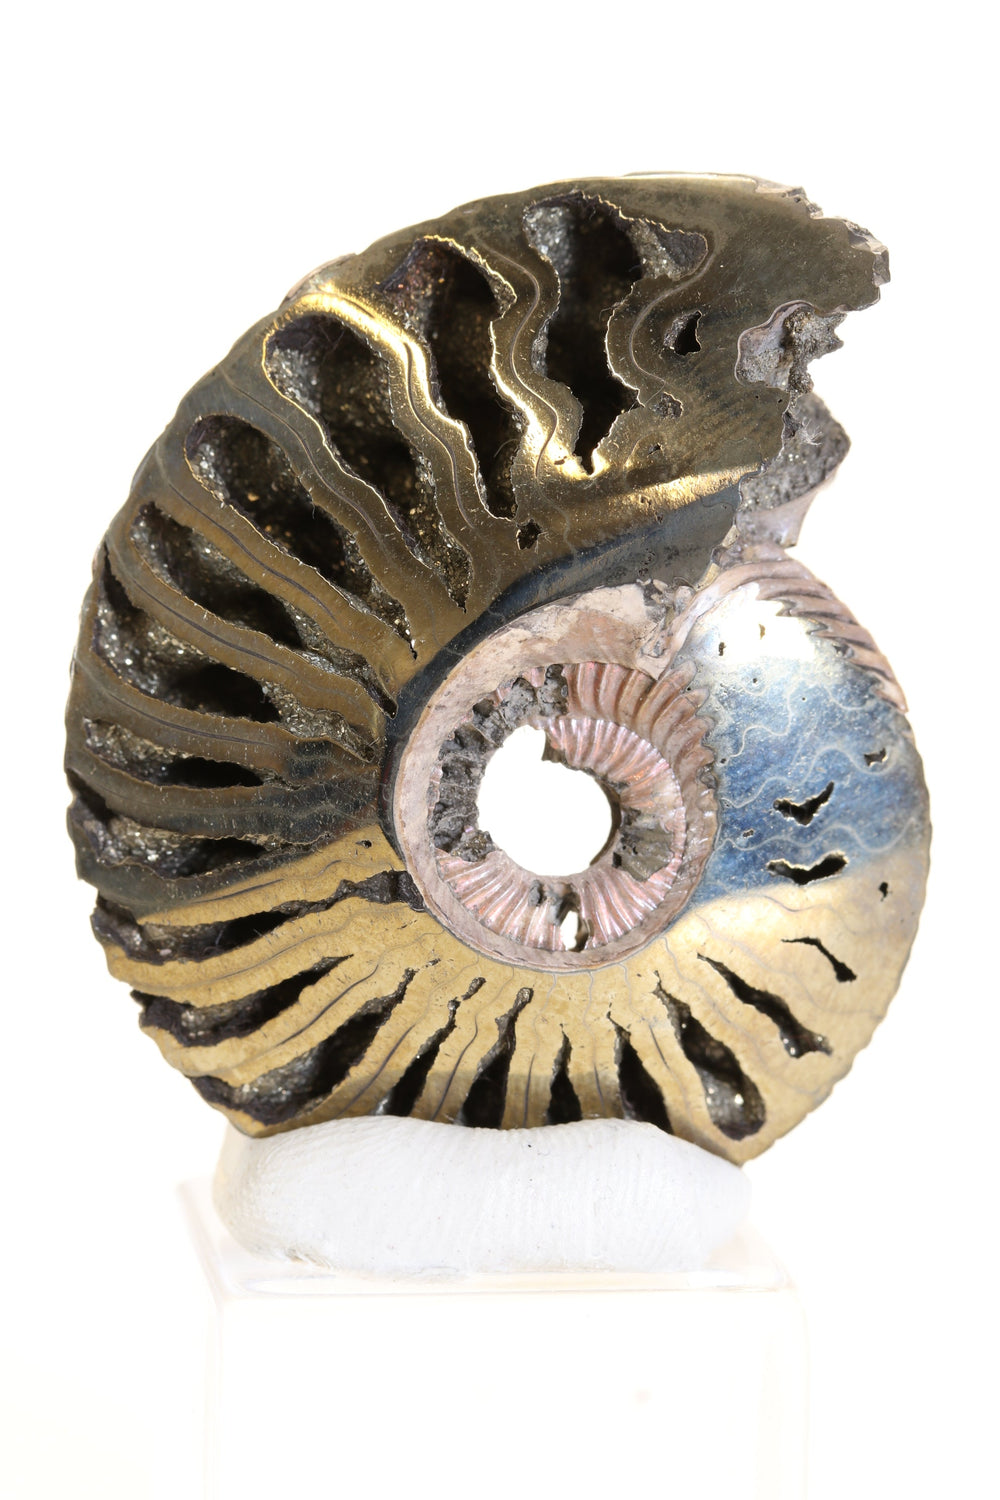 Pyritized Ammonite Fossil TD1774